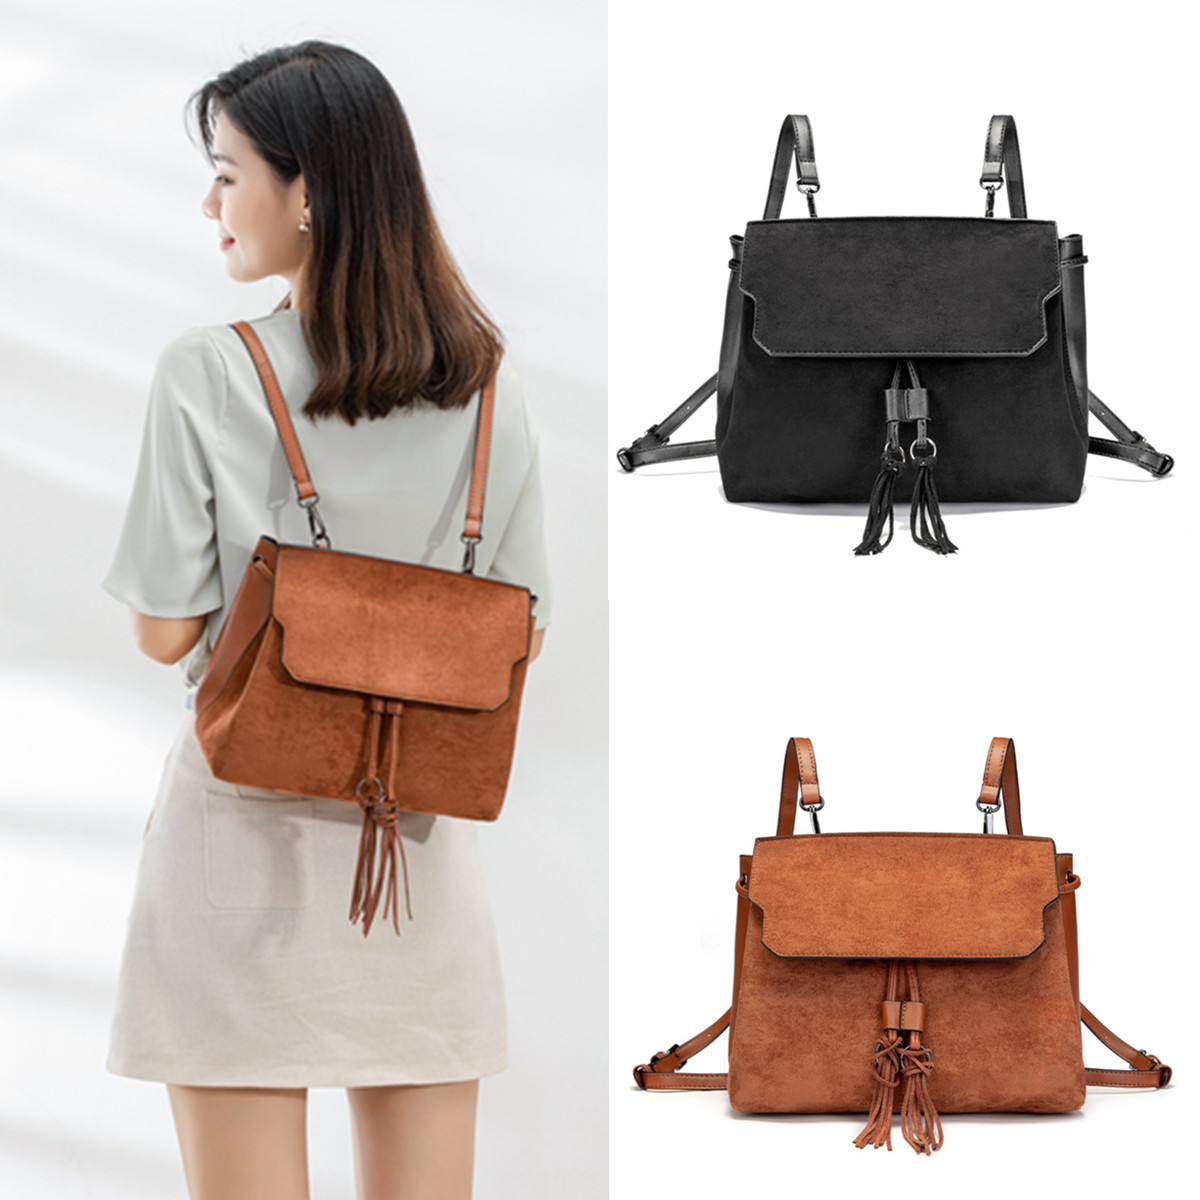 Outdoor-PU-Leather-Backpack-Women-Tassel-Handbag-School-Bag-Travel-Rucksack-1627681-1